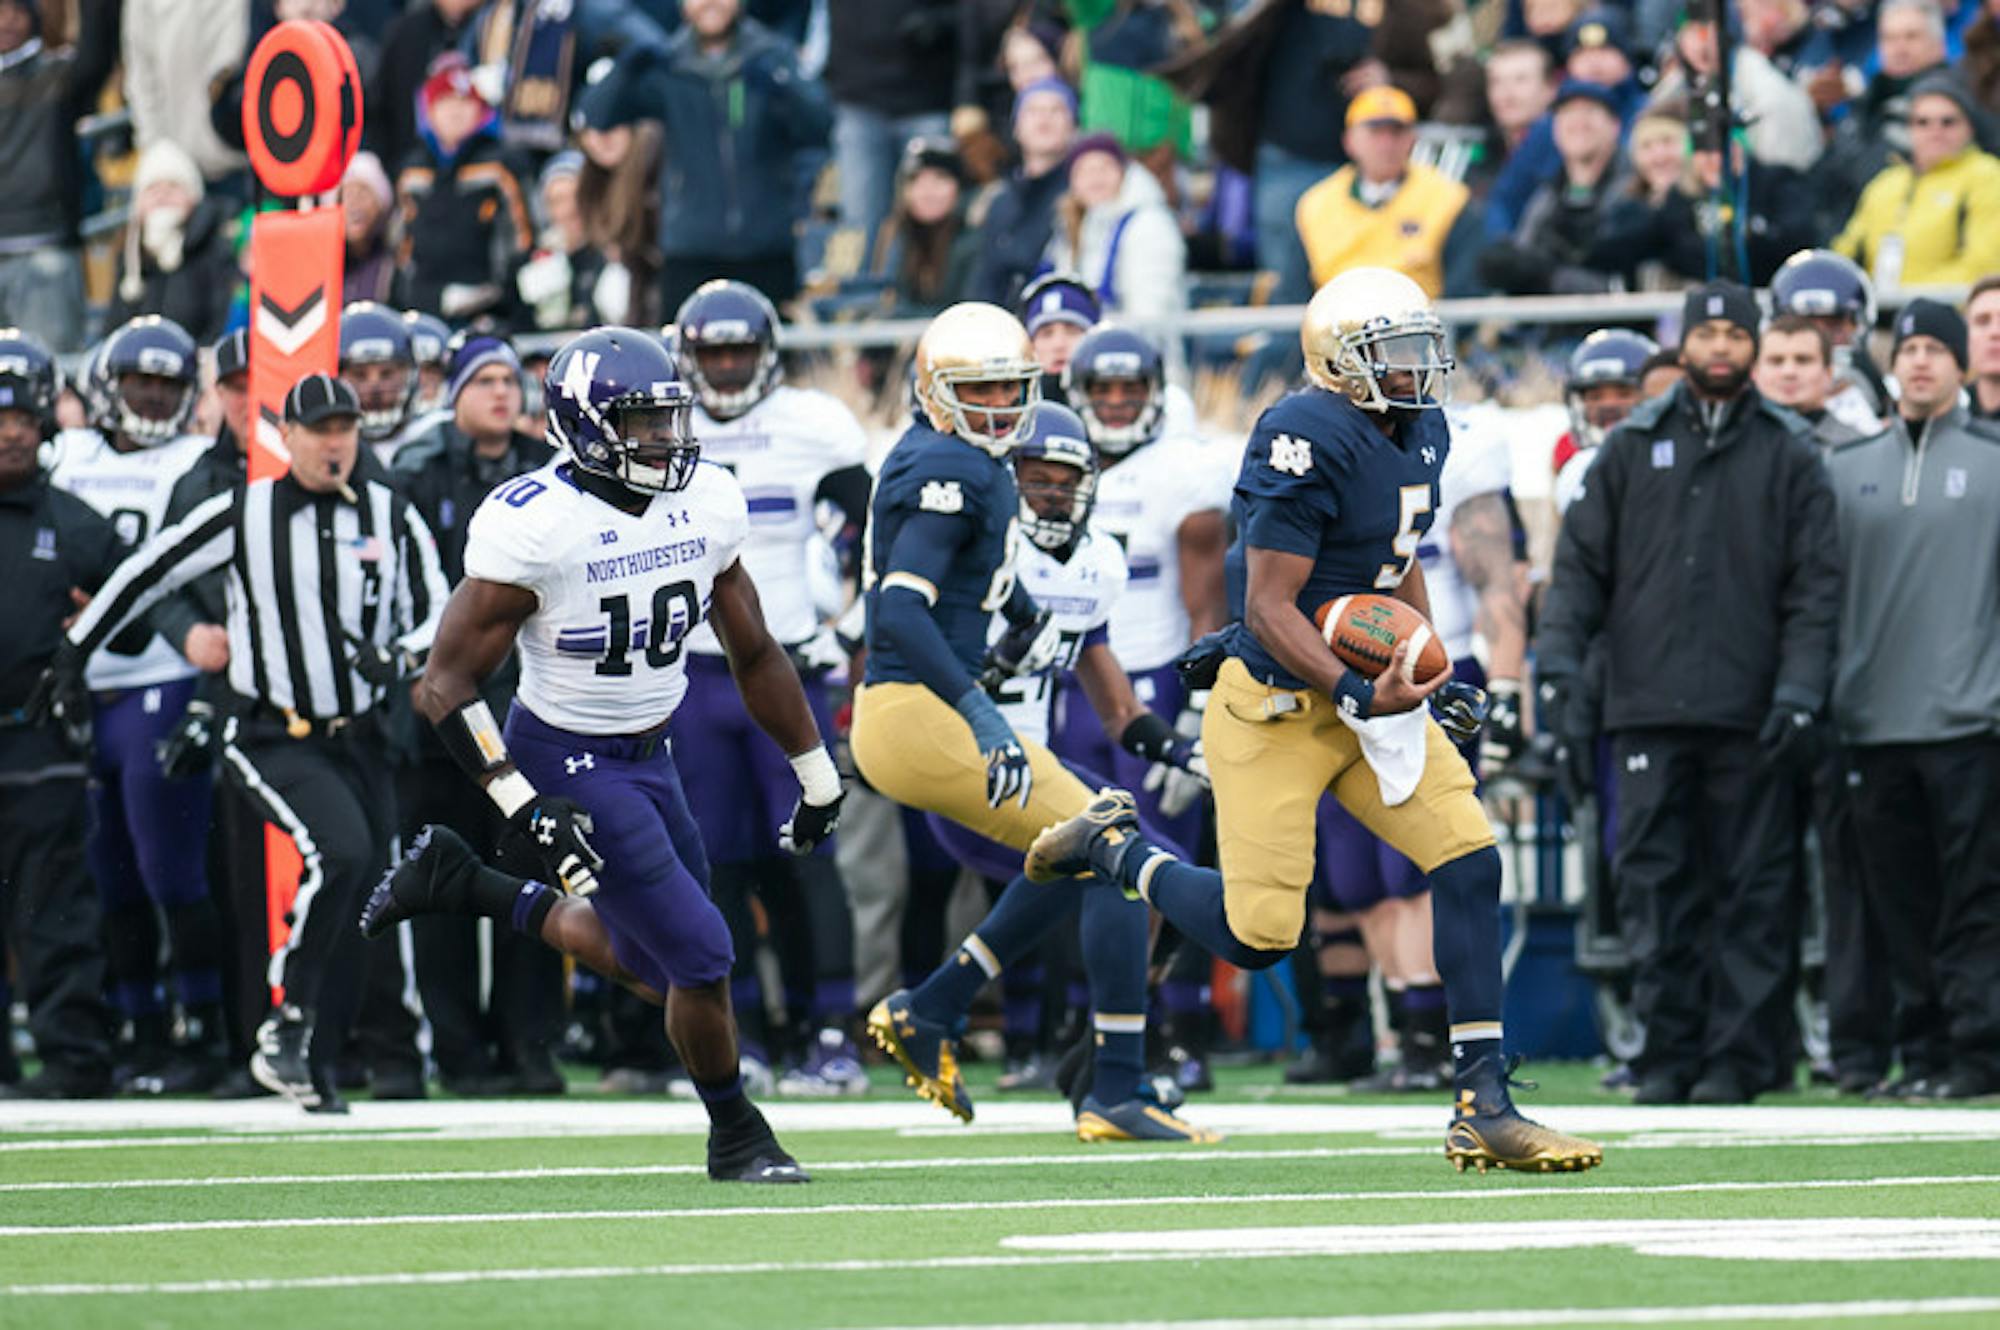 Irish senior quarterback Everett Golson sprints for a 61-yard touchdown in the first quarter.